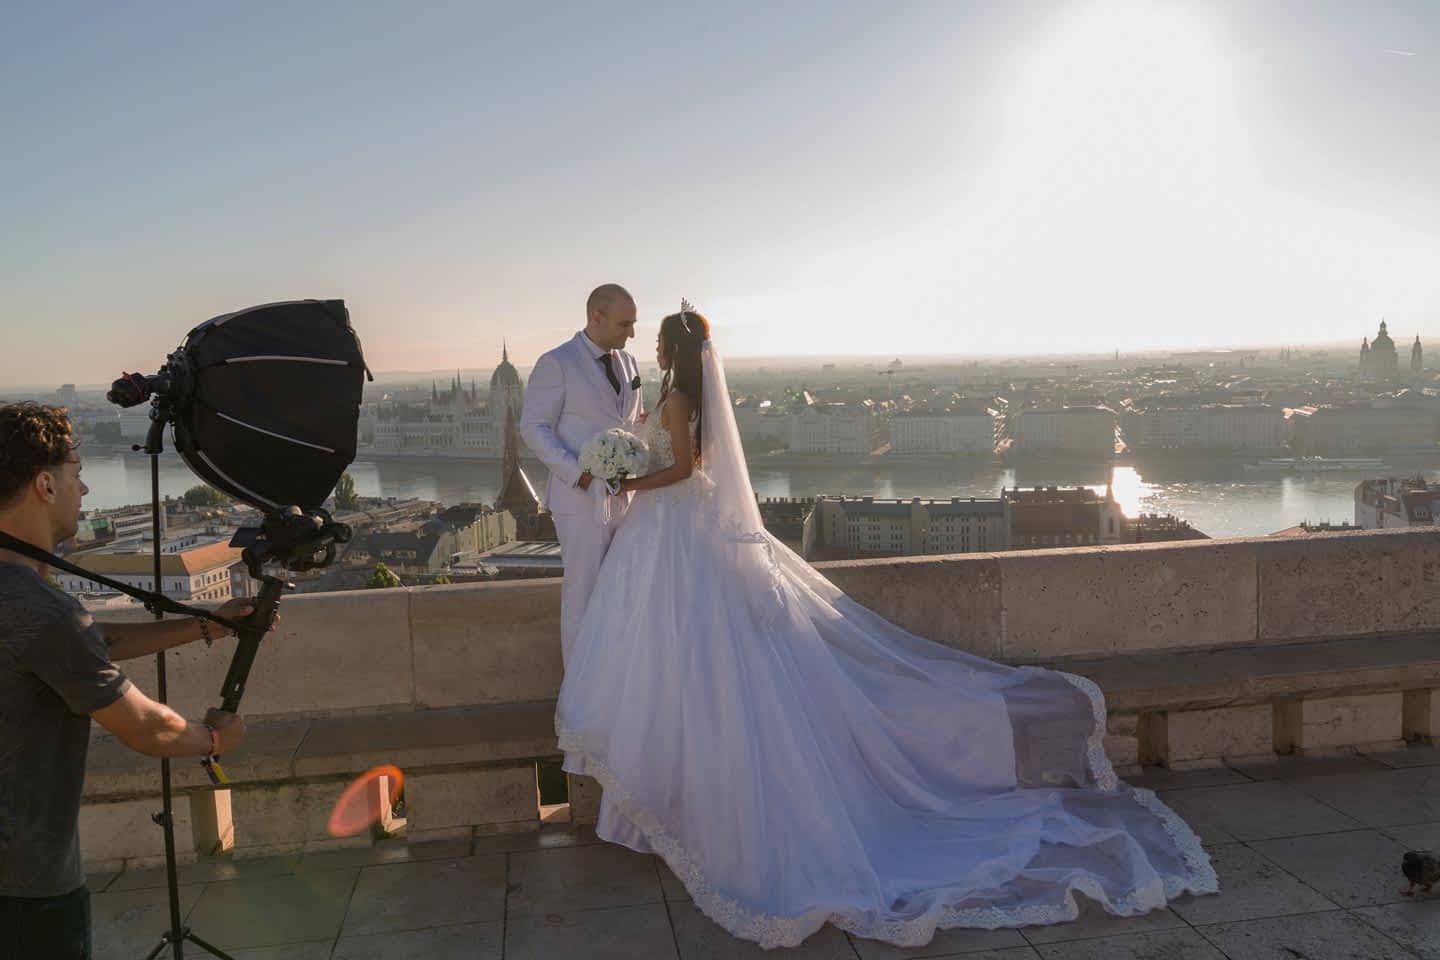 2023 Magic Proposal Photographer & Pre-Wedding Budapest BA prewedding RAW Instawalk Your memories captured by a local Photographer / Videographer in Budapest.